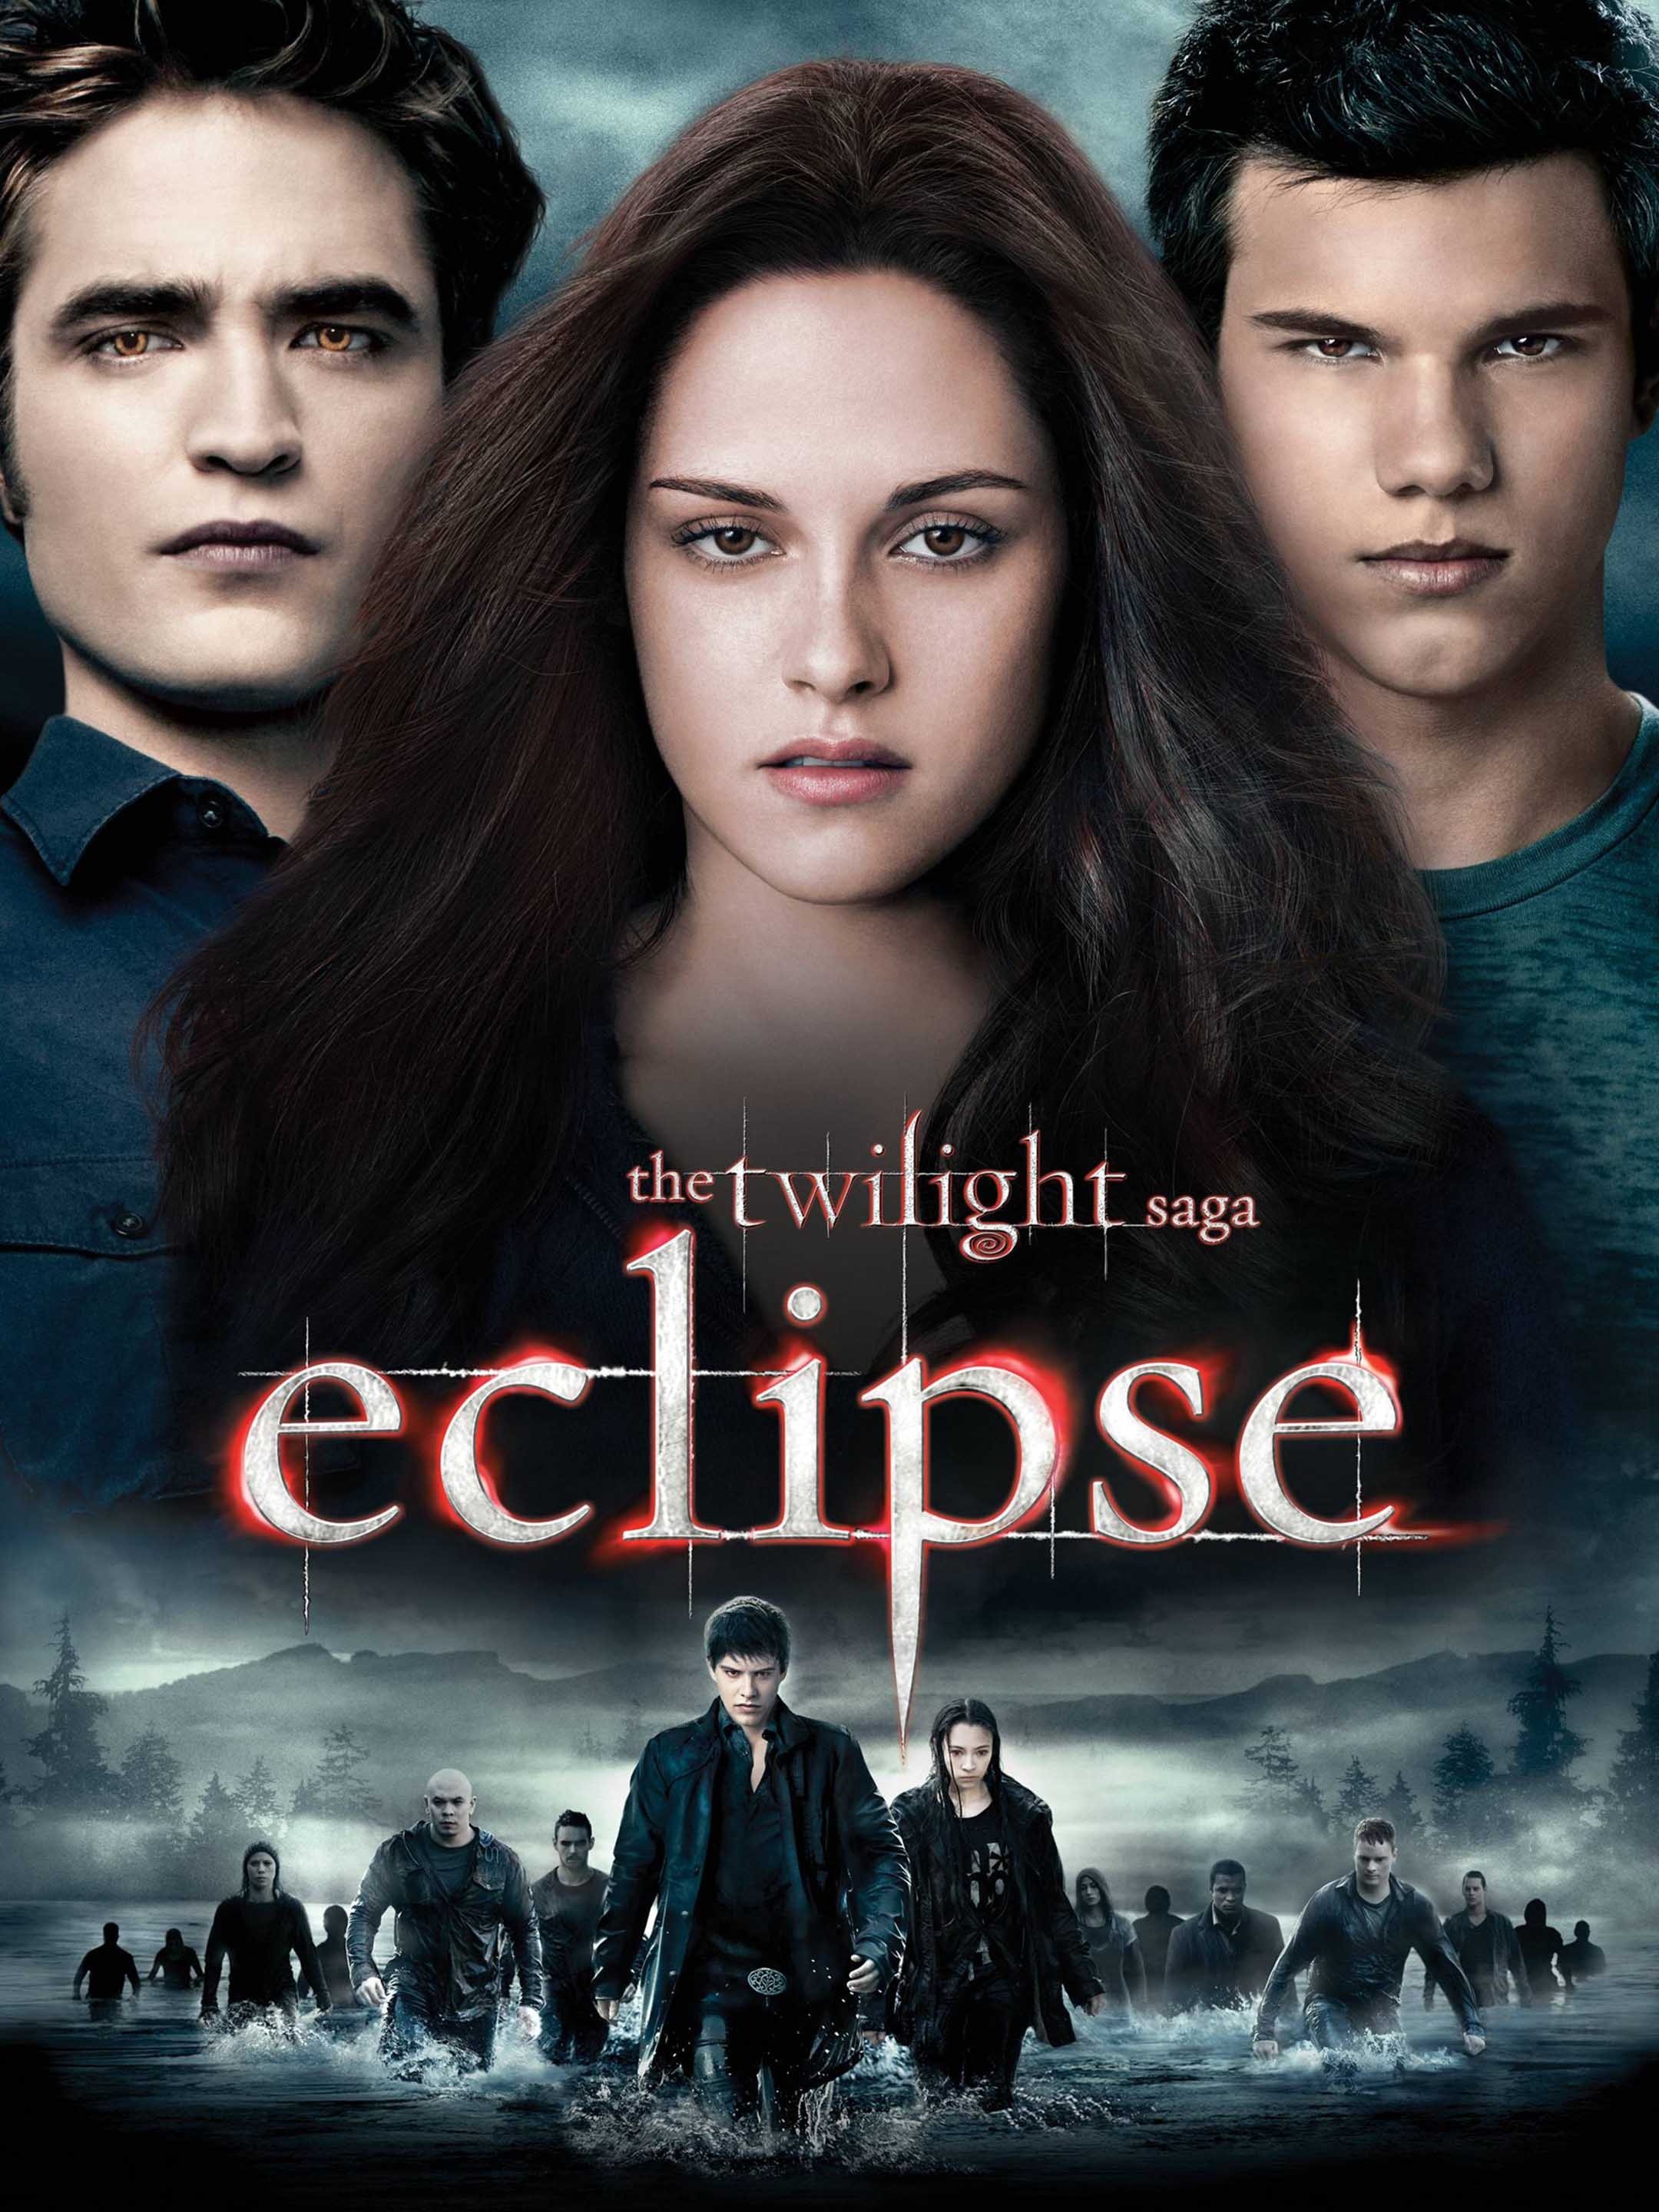 Cast of twilight eclipse